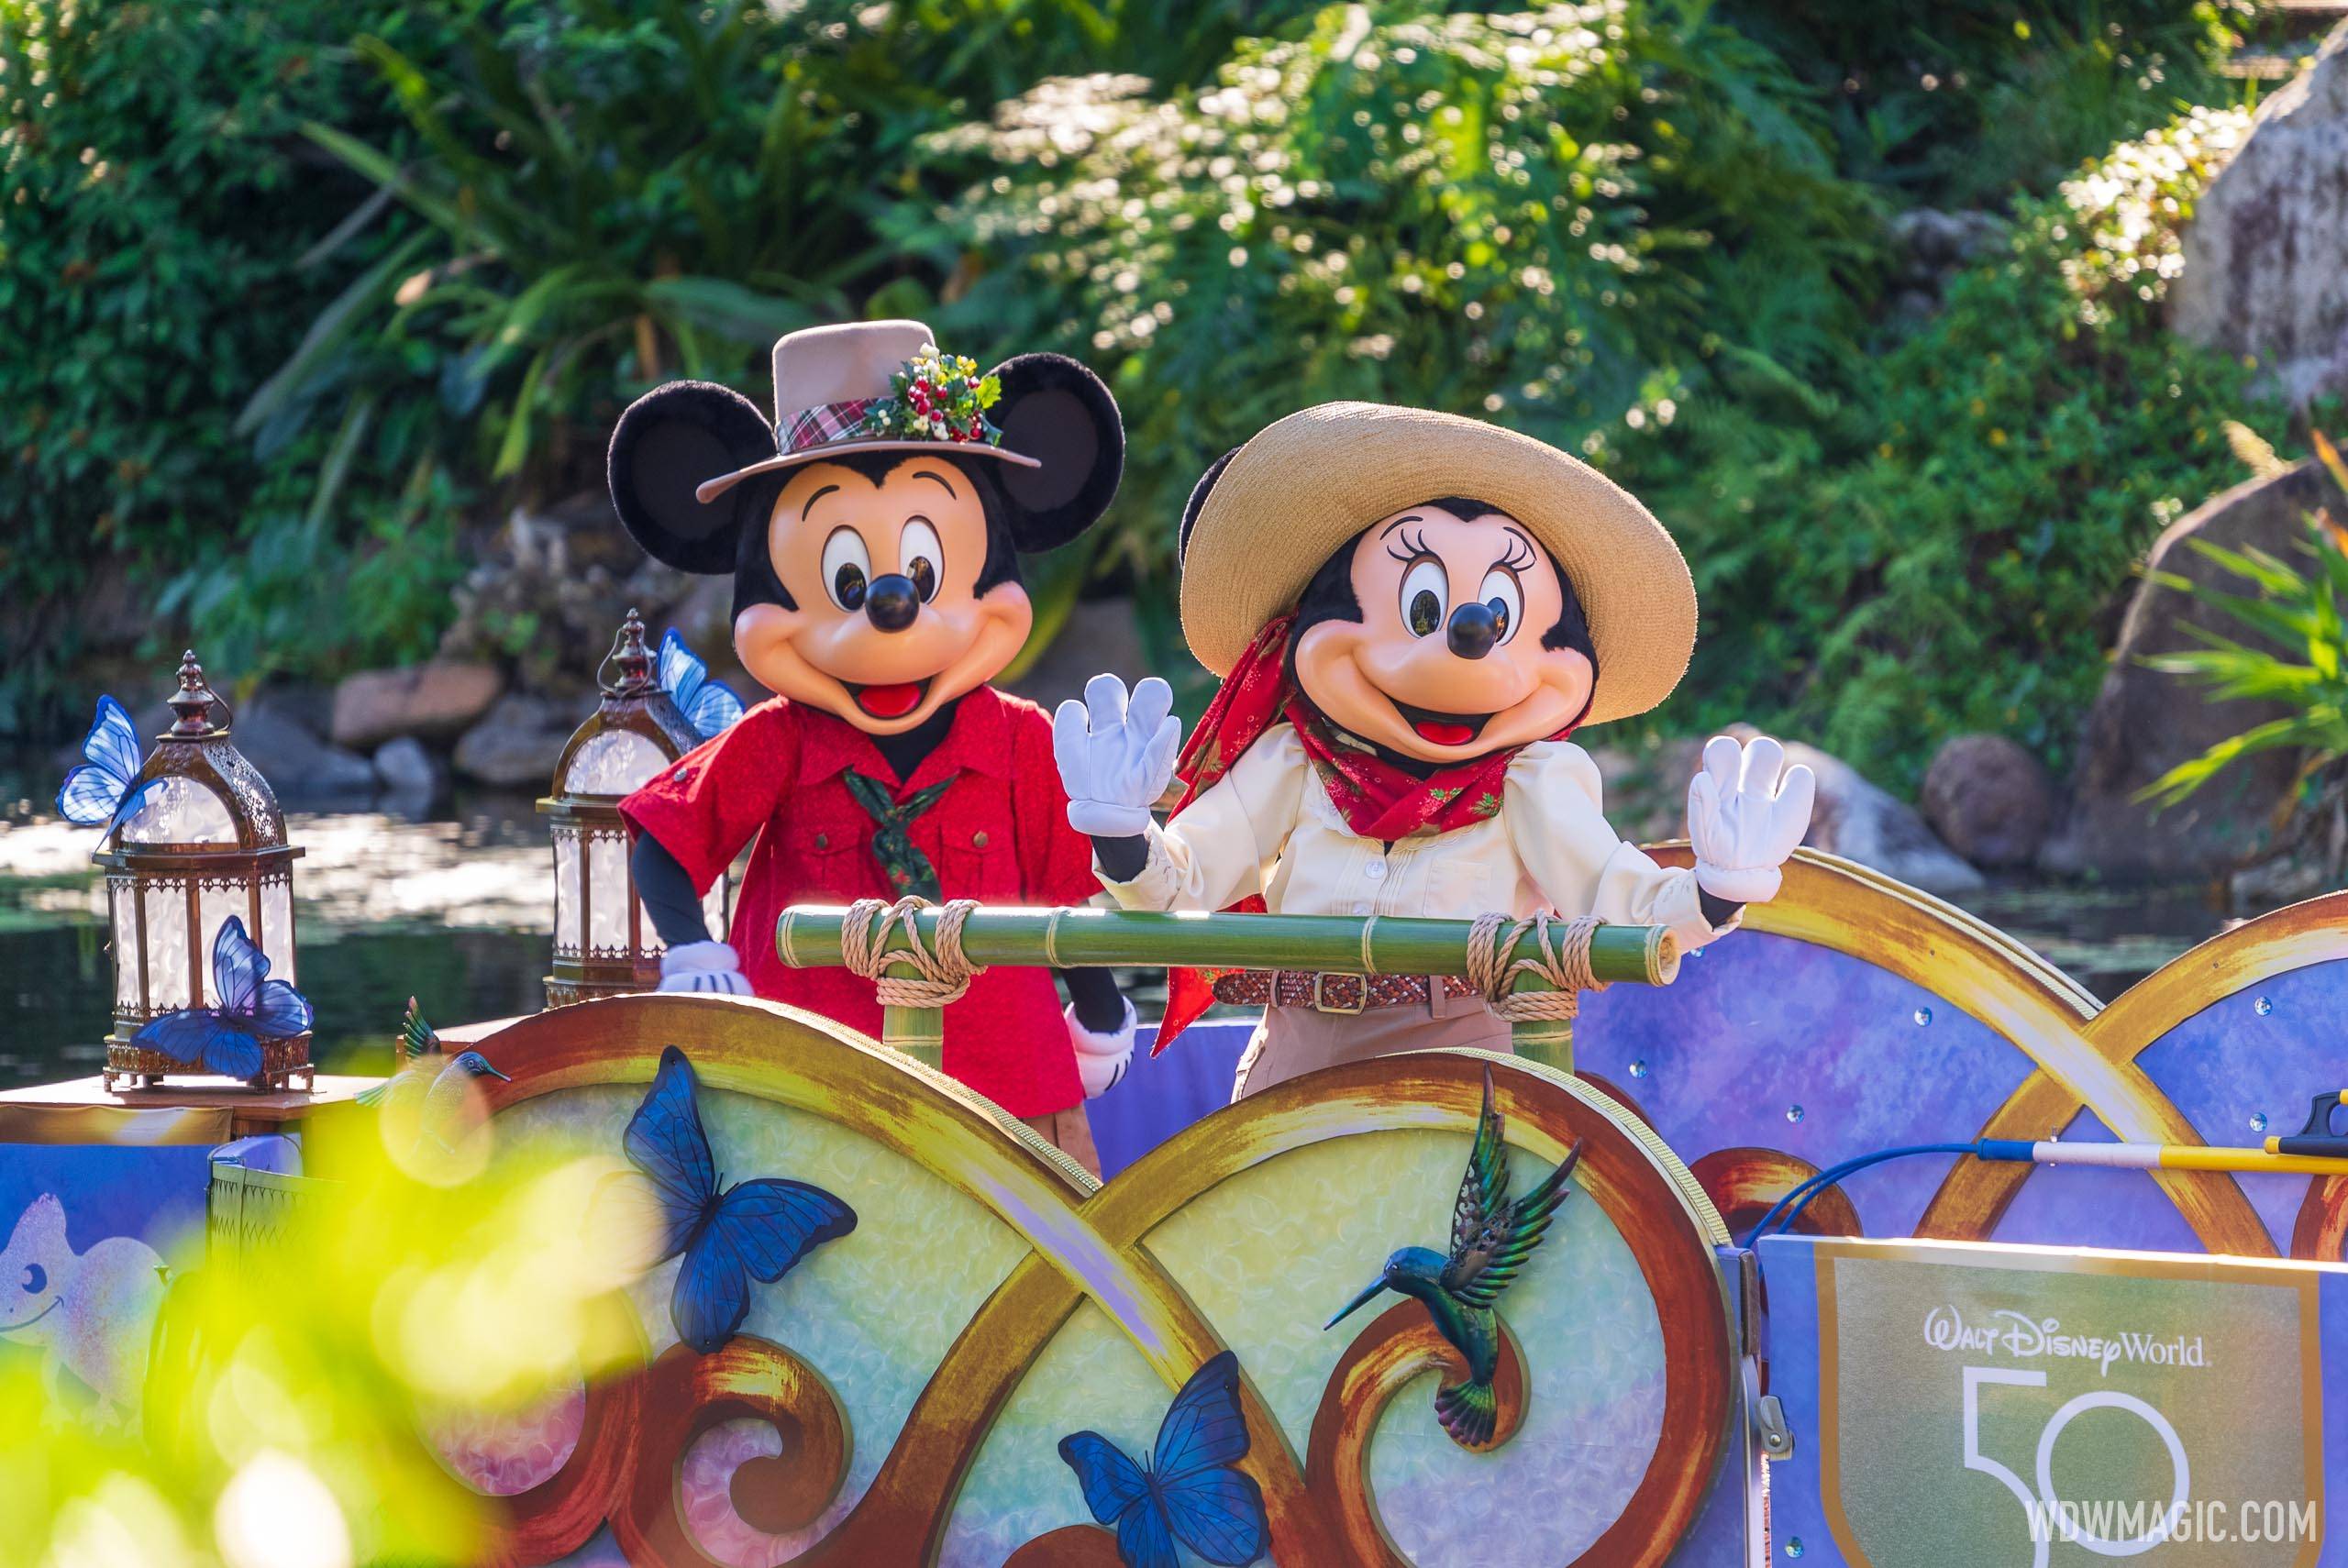 Mickey and Minnie's Festive Flotilla